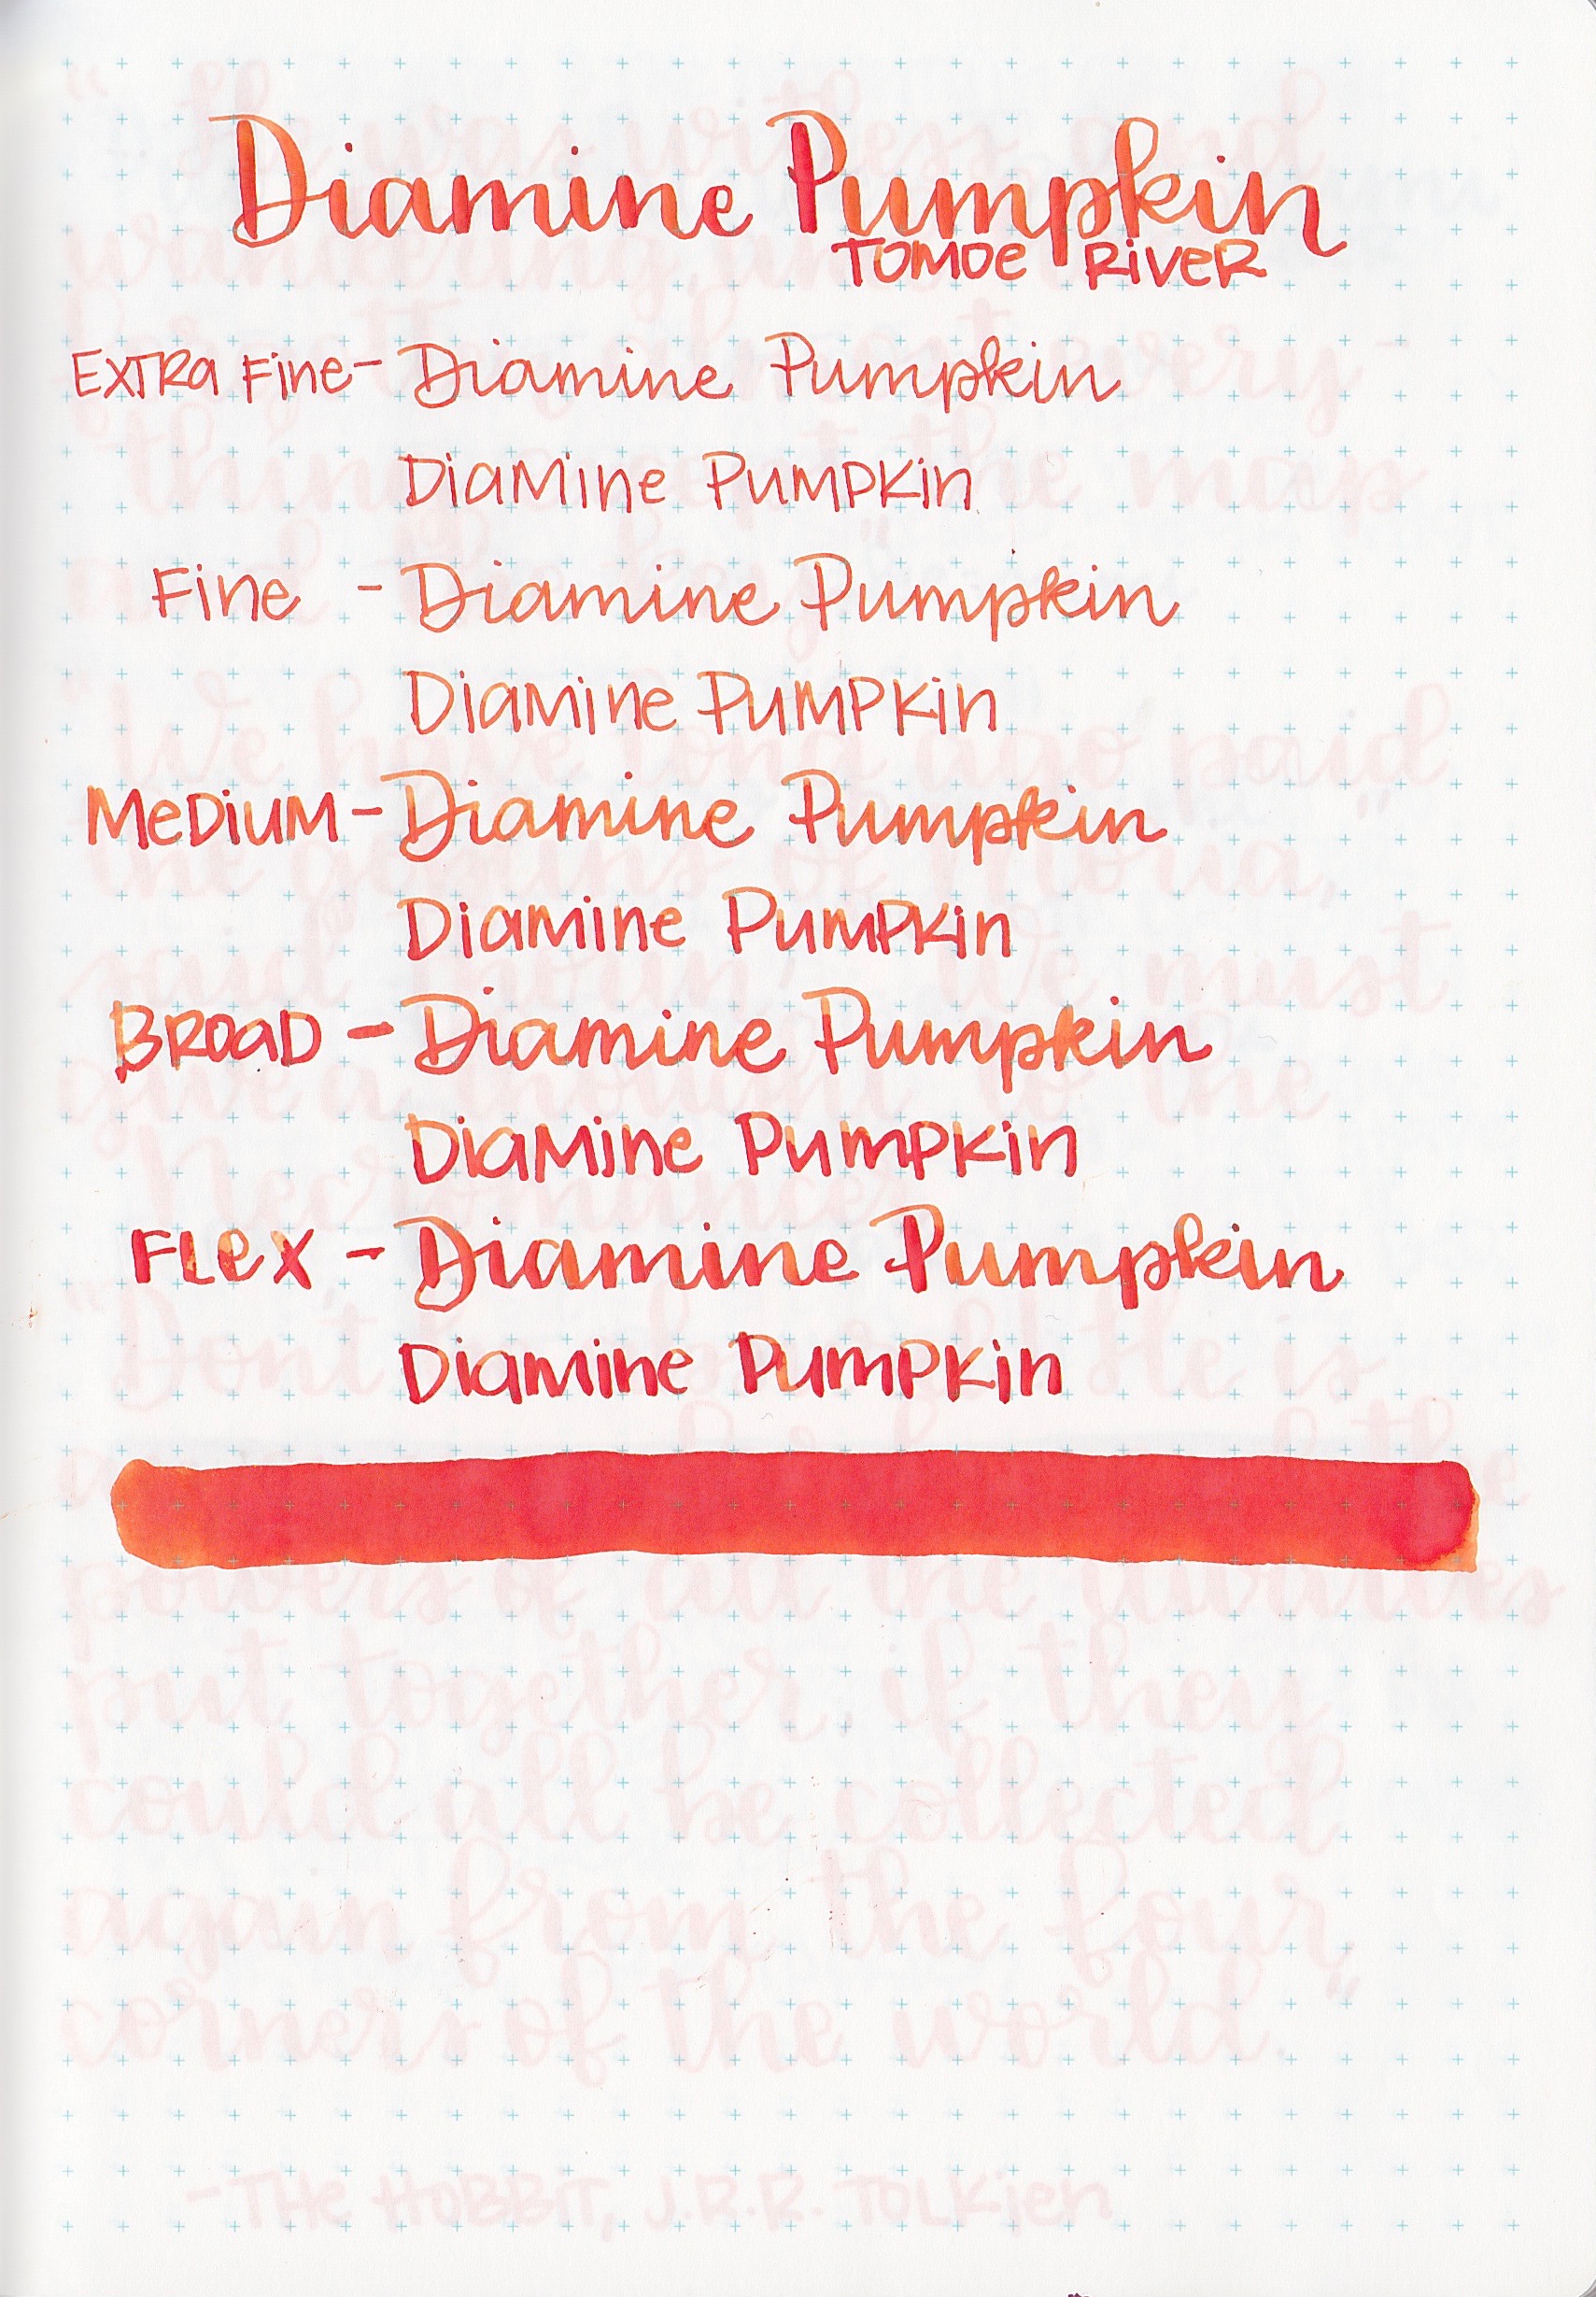 DPumpkin - 6.jpg